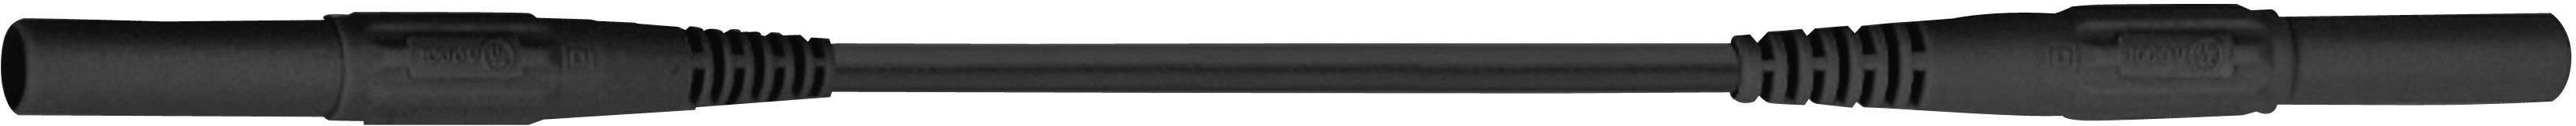 MULTICONTACT Sicherheits-Messleitung [ Lamellenstecker 4 mm - Lamellenstecker 4 mm] 2 m Schwarz Mult